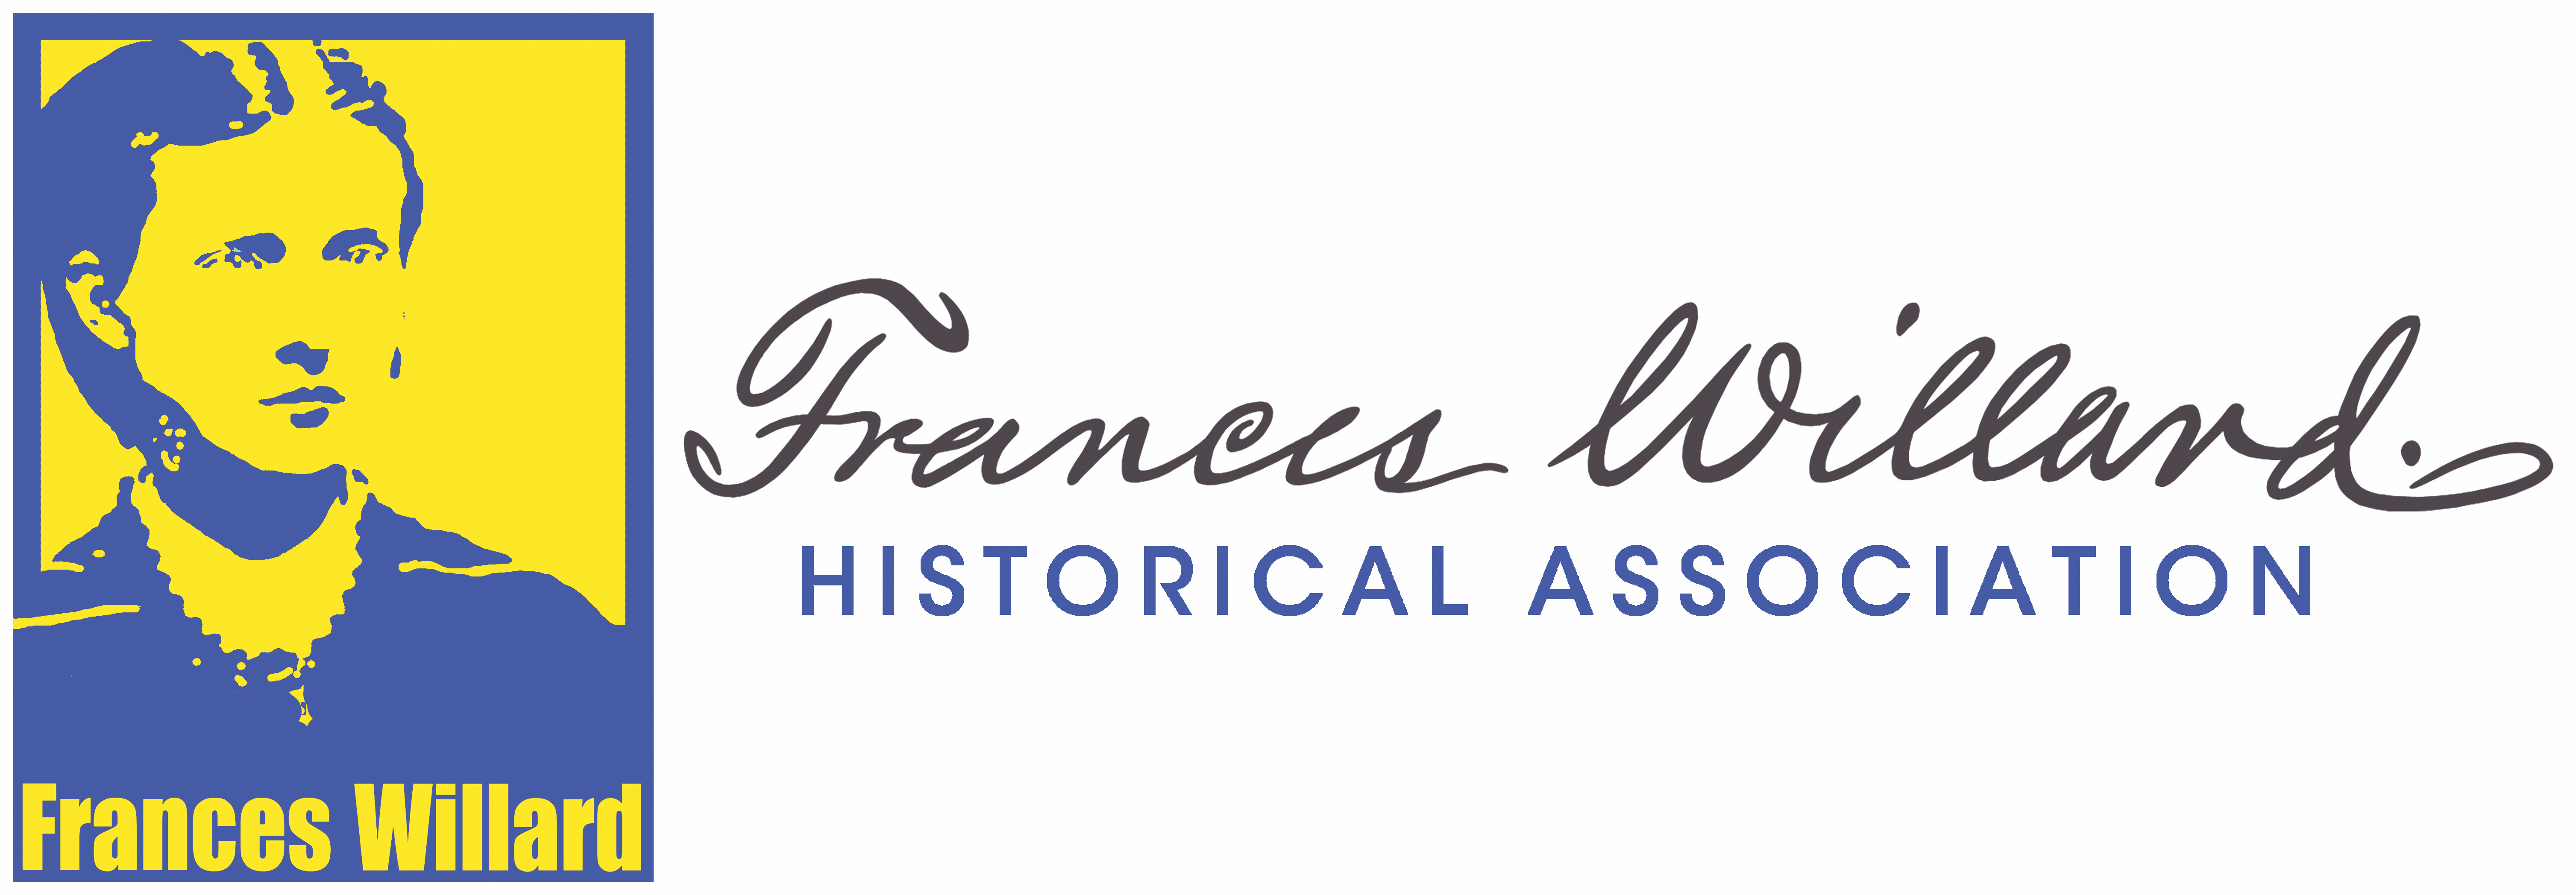 Frances Willard Historical Association logo